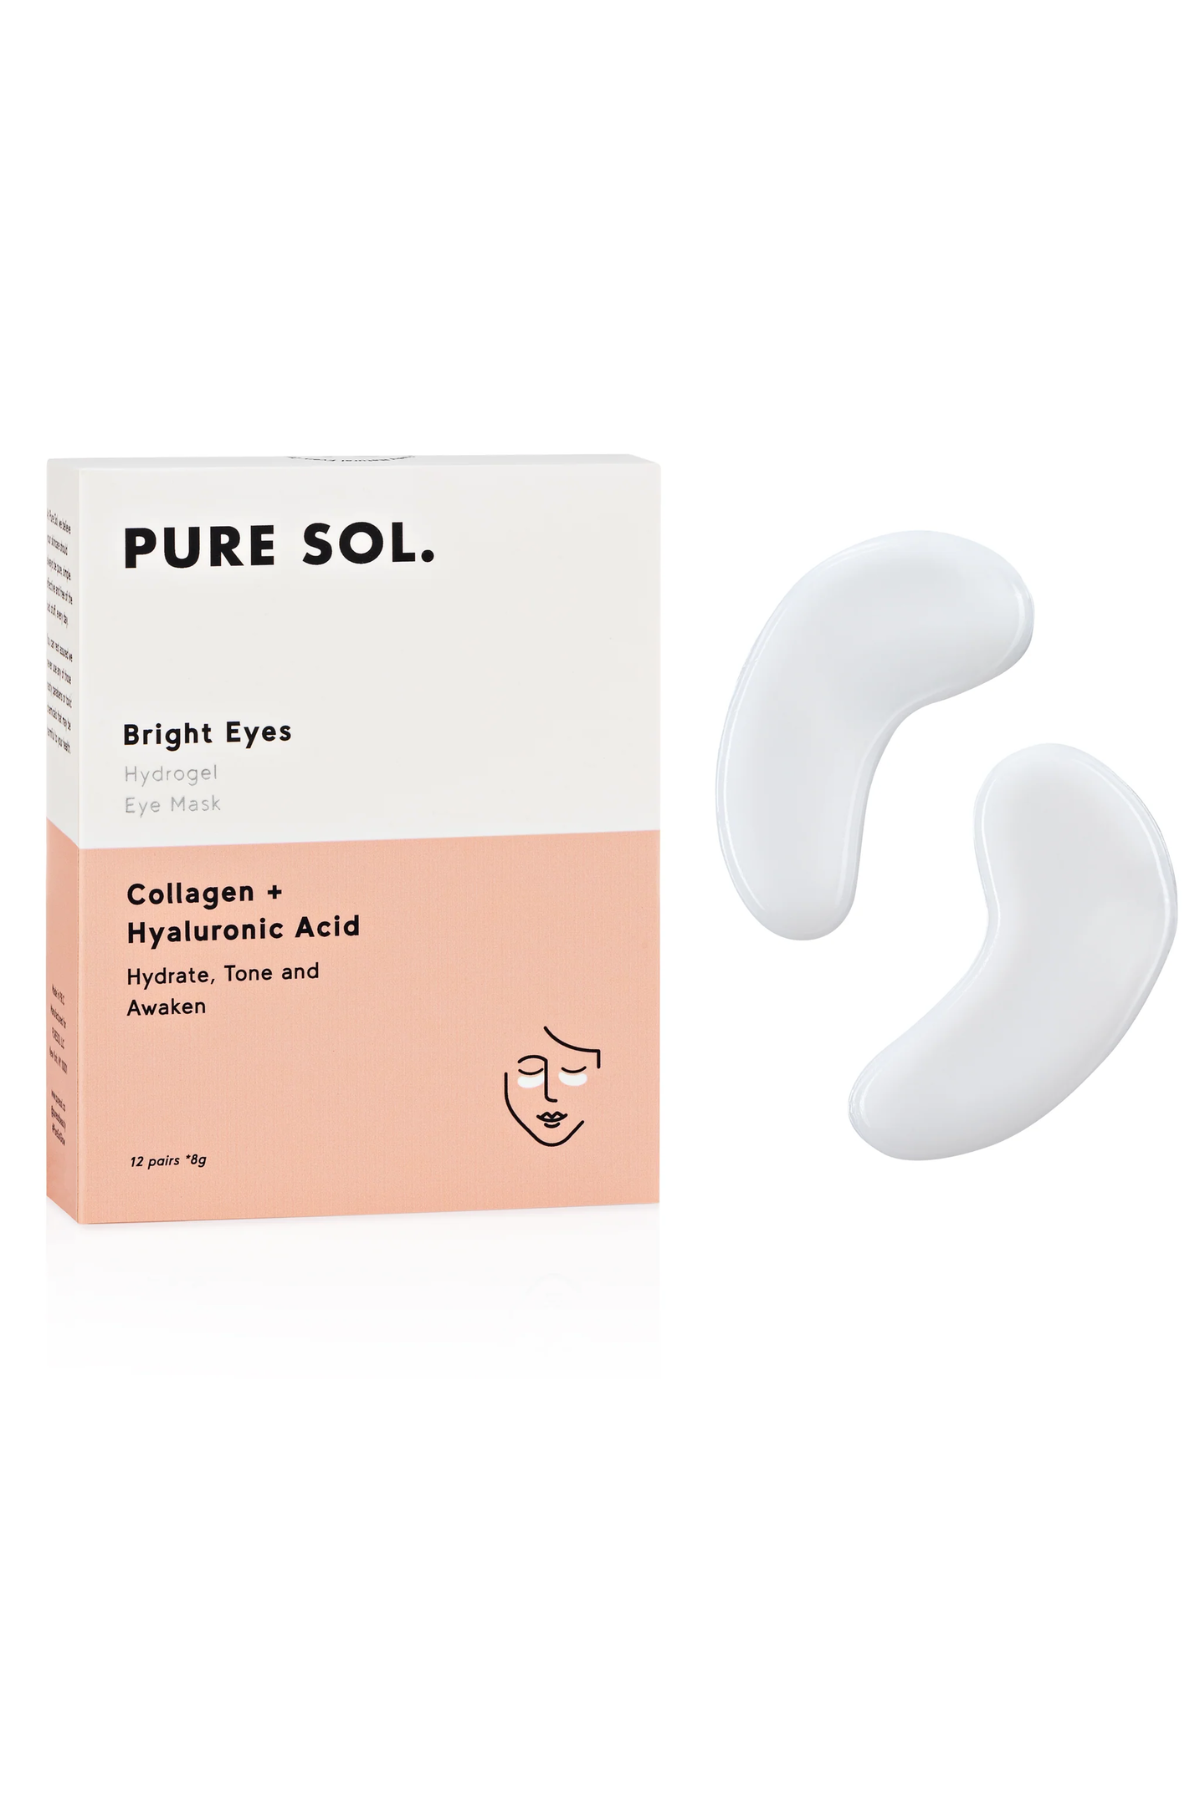 Bright Eyes | Collagen, Hyaluronic Acid, Vitamin C Eye Masks